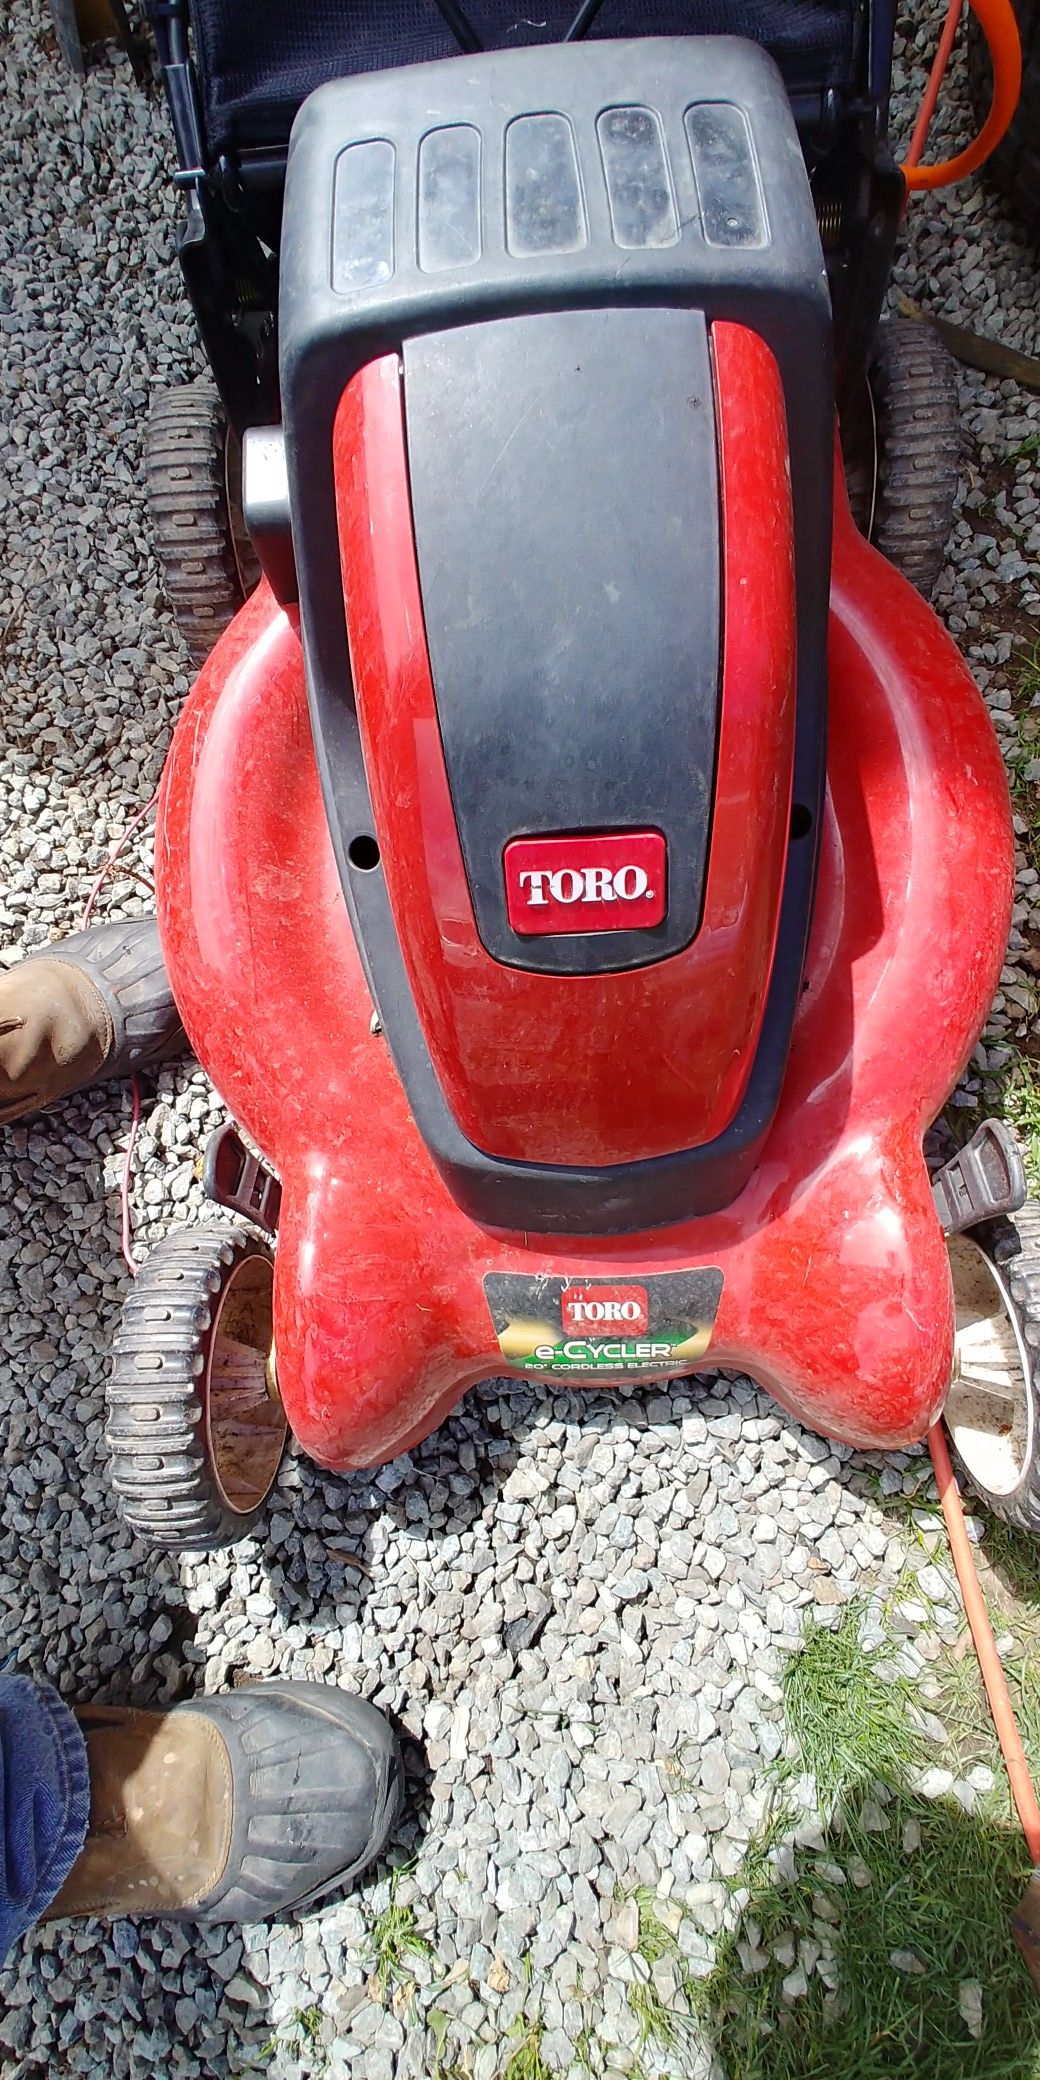 Toro. Lawn mower